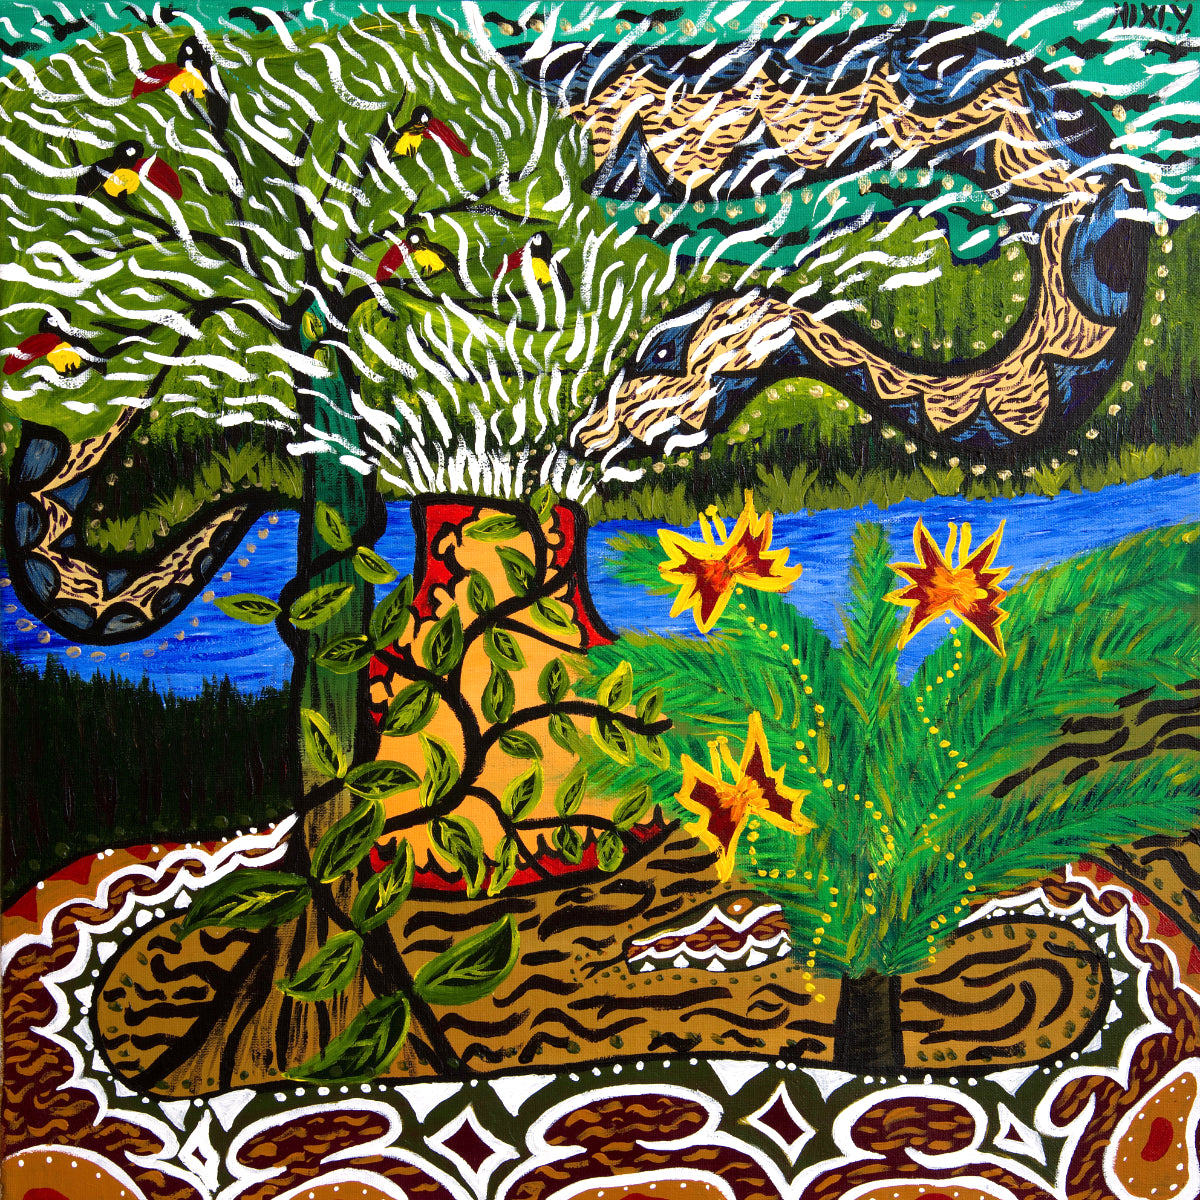  Paintings  of Amazon  Rainforest Artists John Dyer 